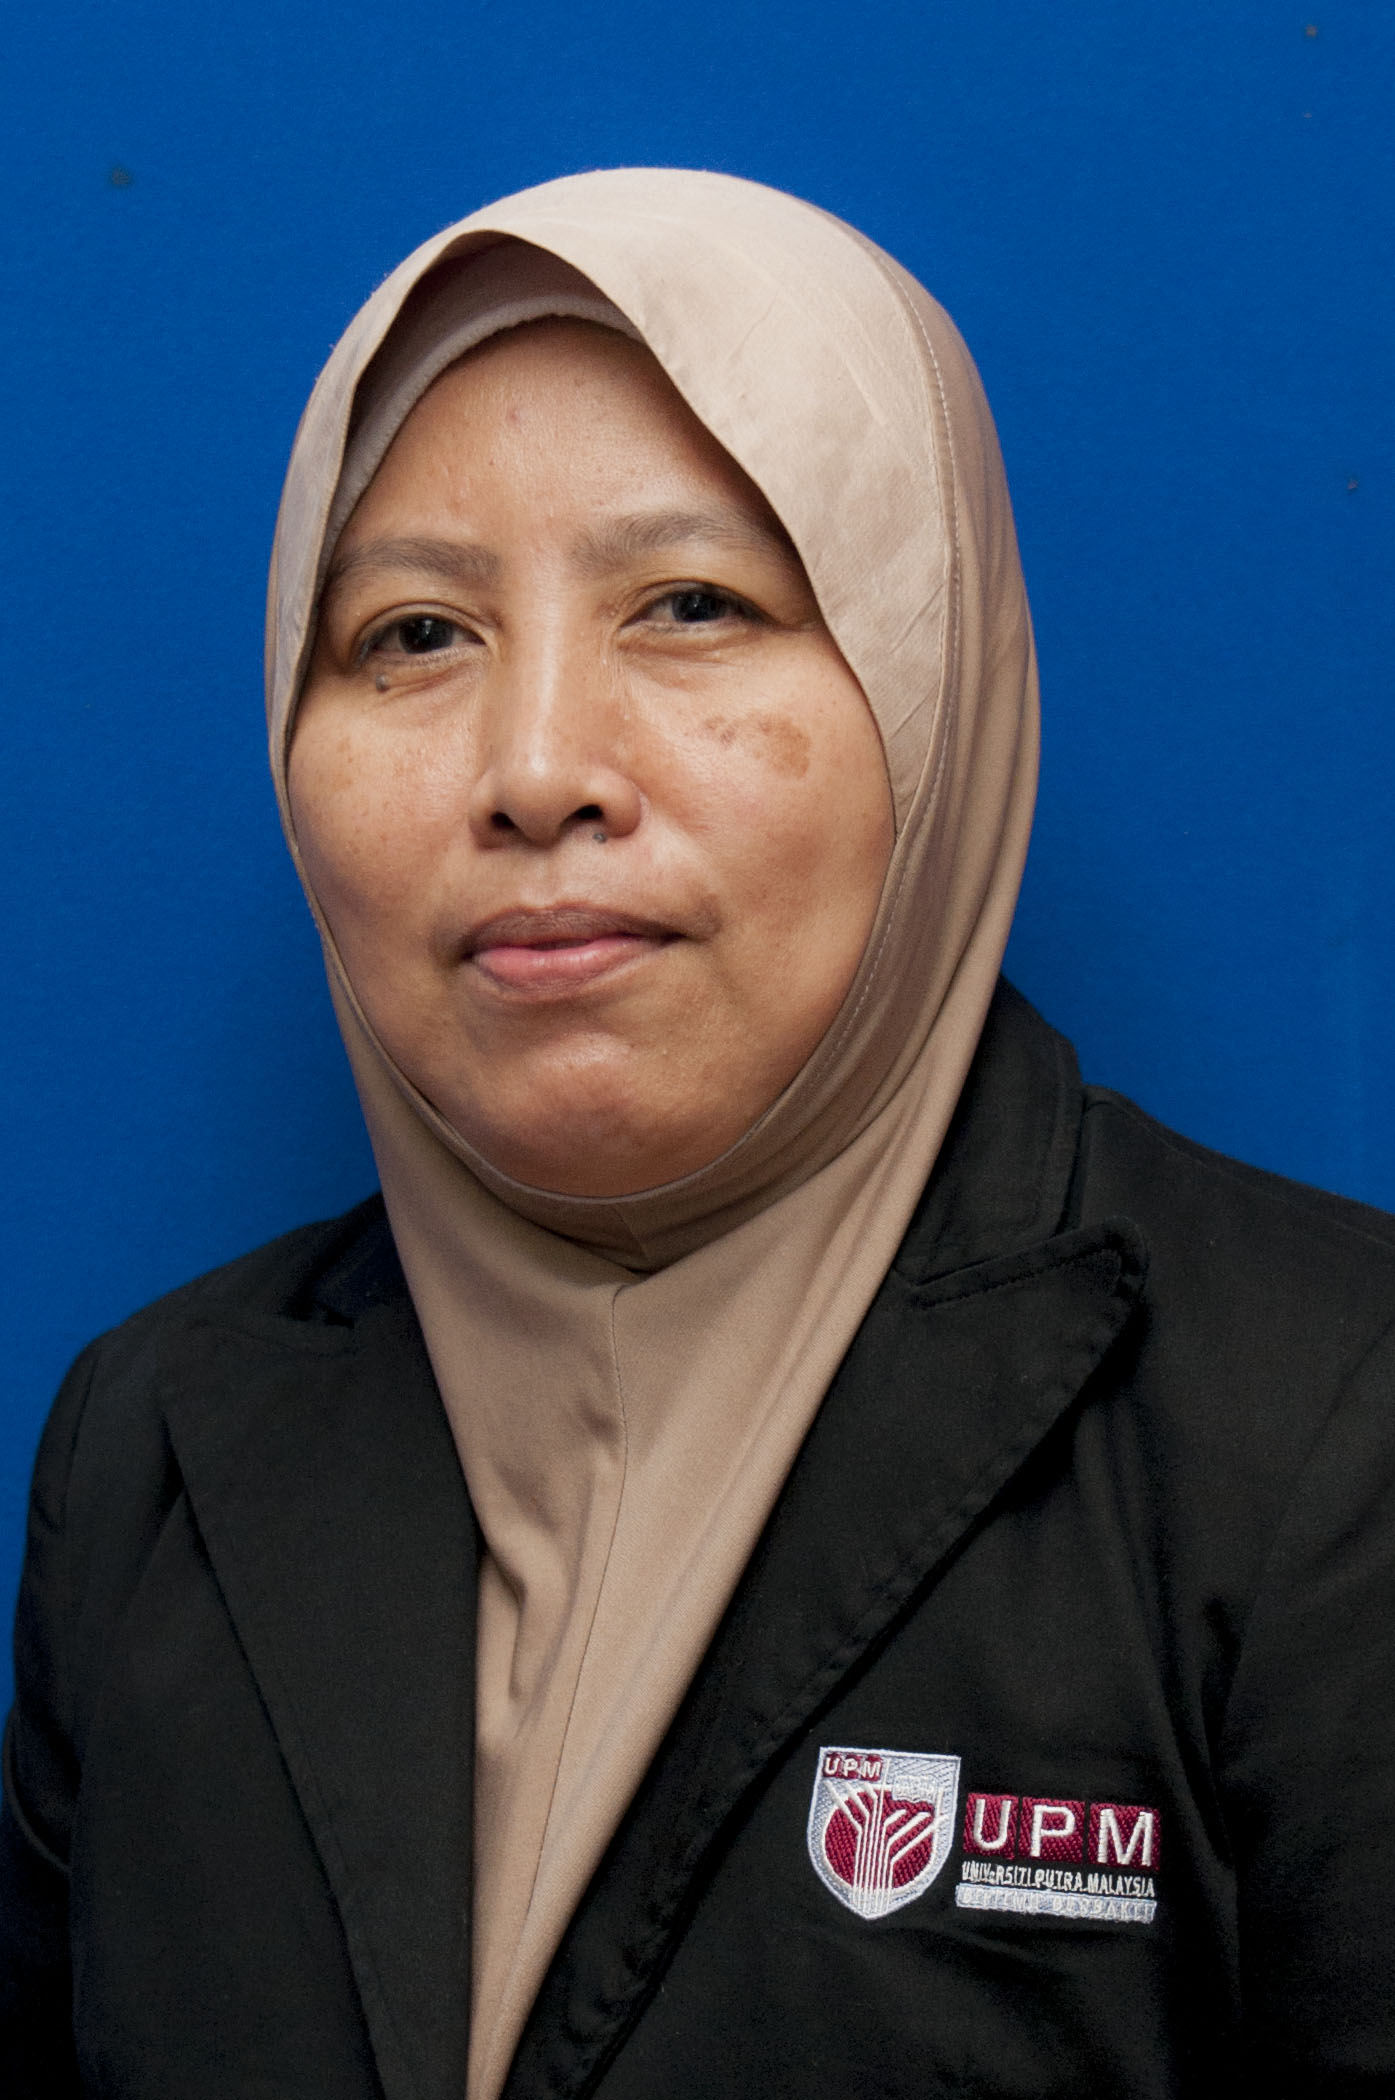 Datuk Normaziah Sheikh Mohamad - Rebecca paul, 67kaitlin gross